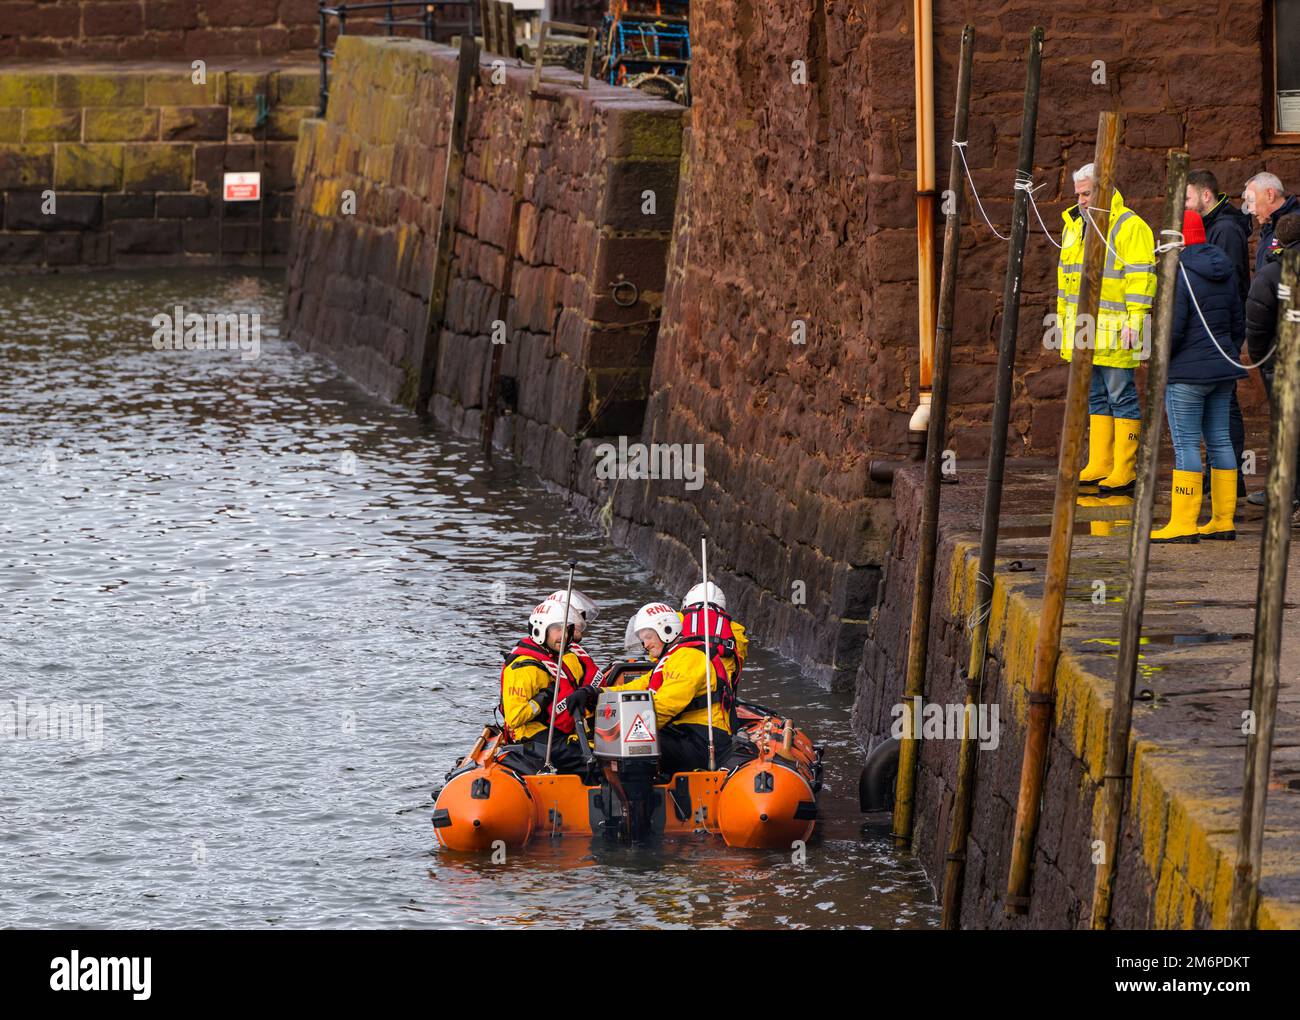 Imbarcazione rigida gonfiabile Royal National Lifeboat Institution (RNLI), Firth of Forth SEA, North Berwick, East Lothian, Scotland, UK Foto Stock